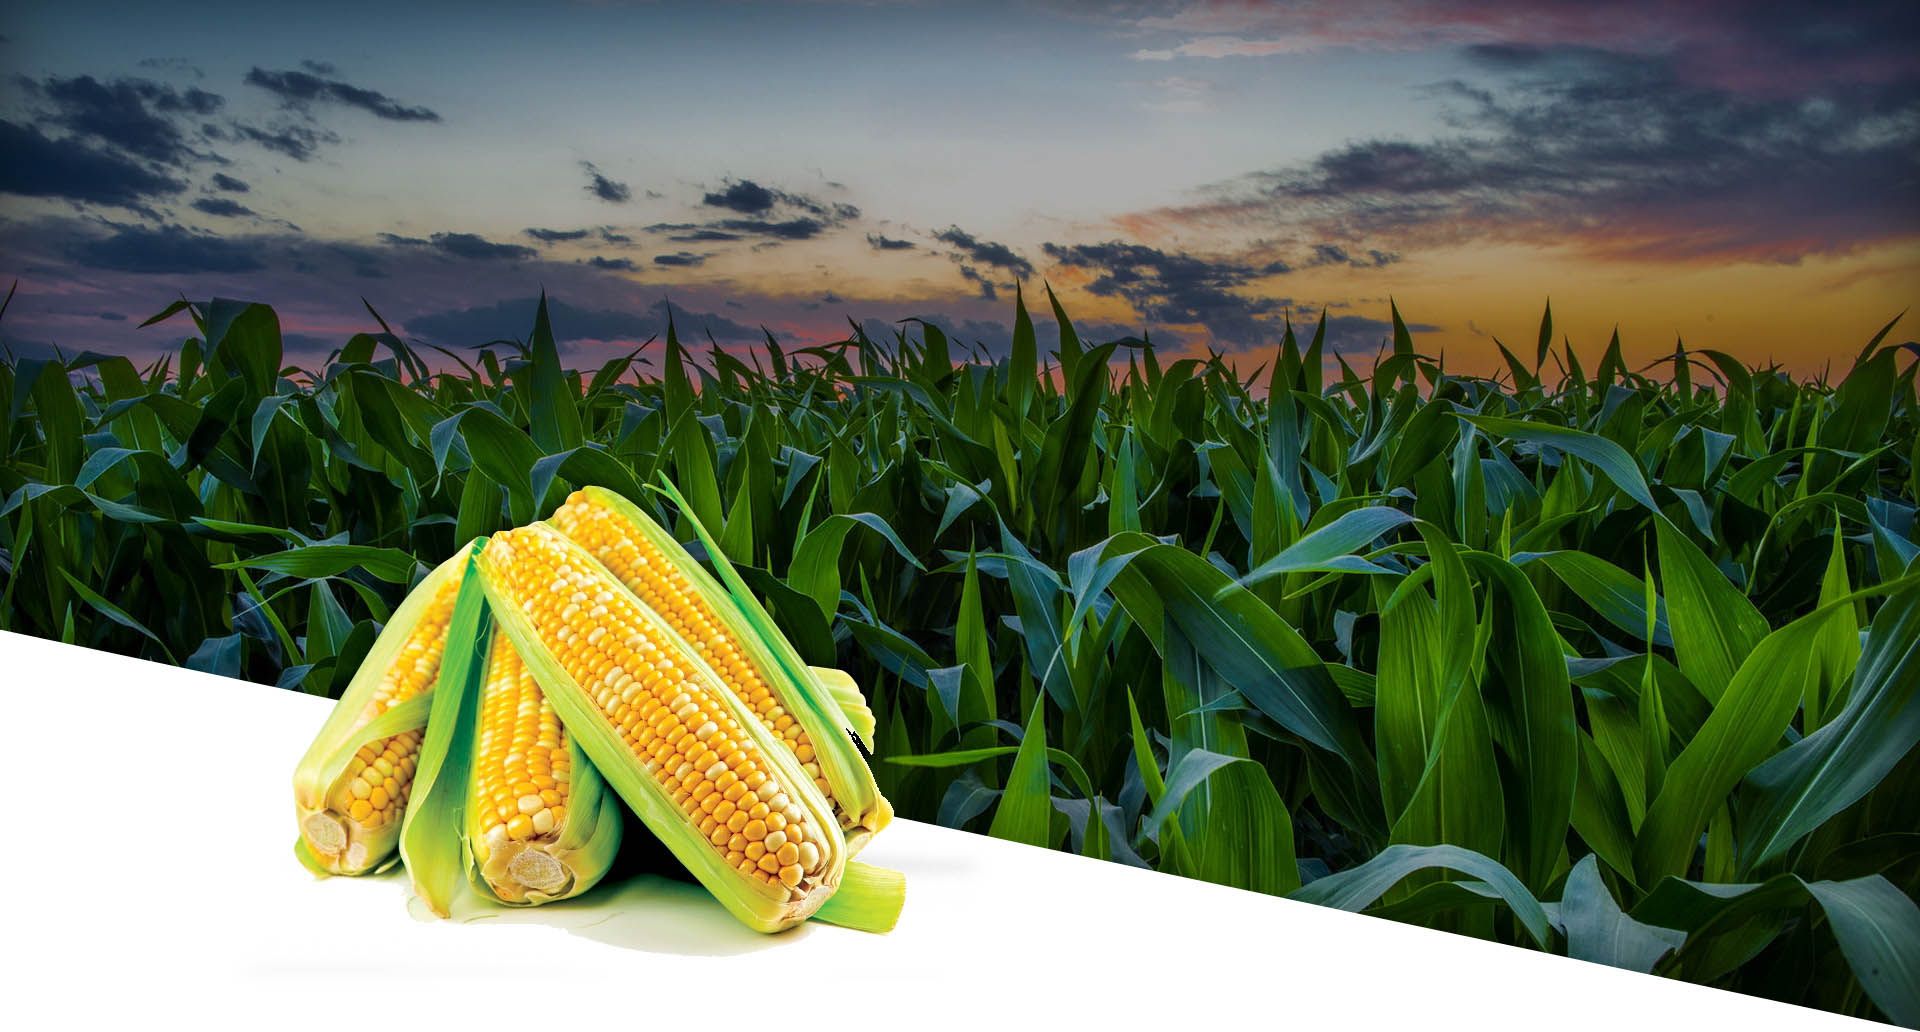 Corn note. Поле кукурузы с початками. Кукуруза в Северной Америке. Семена кукурузы подсолнуха и кукурузы. Красивое кукурузное поле.